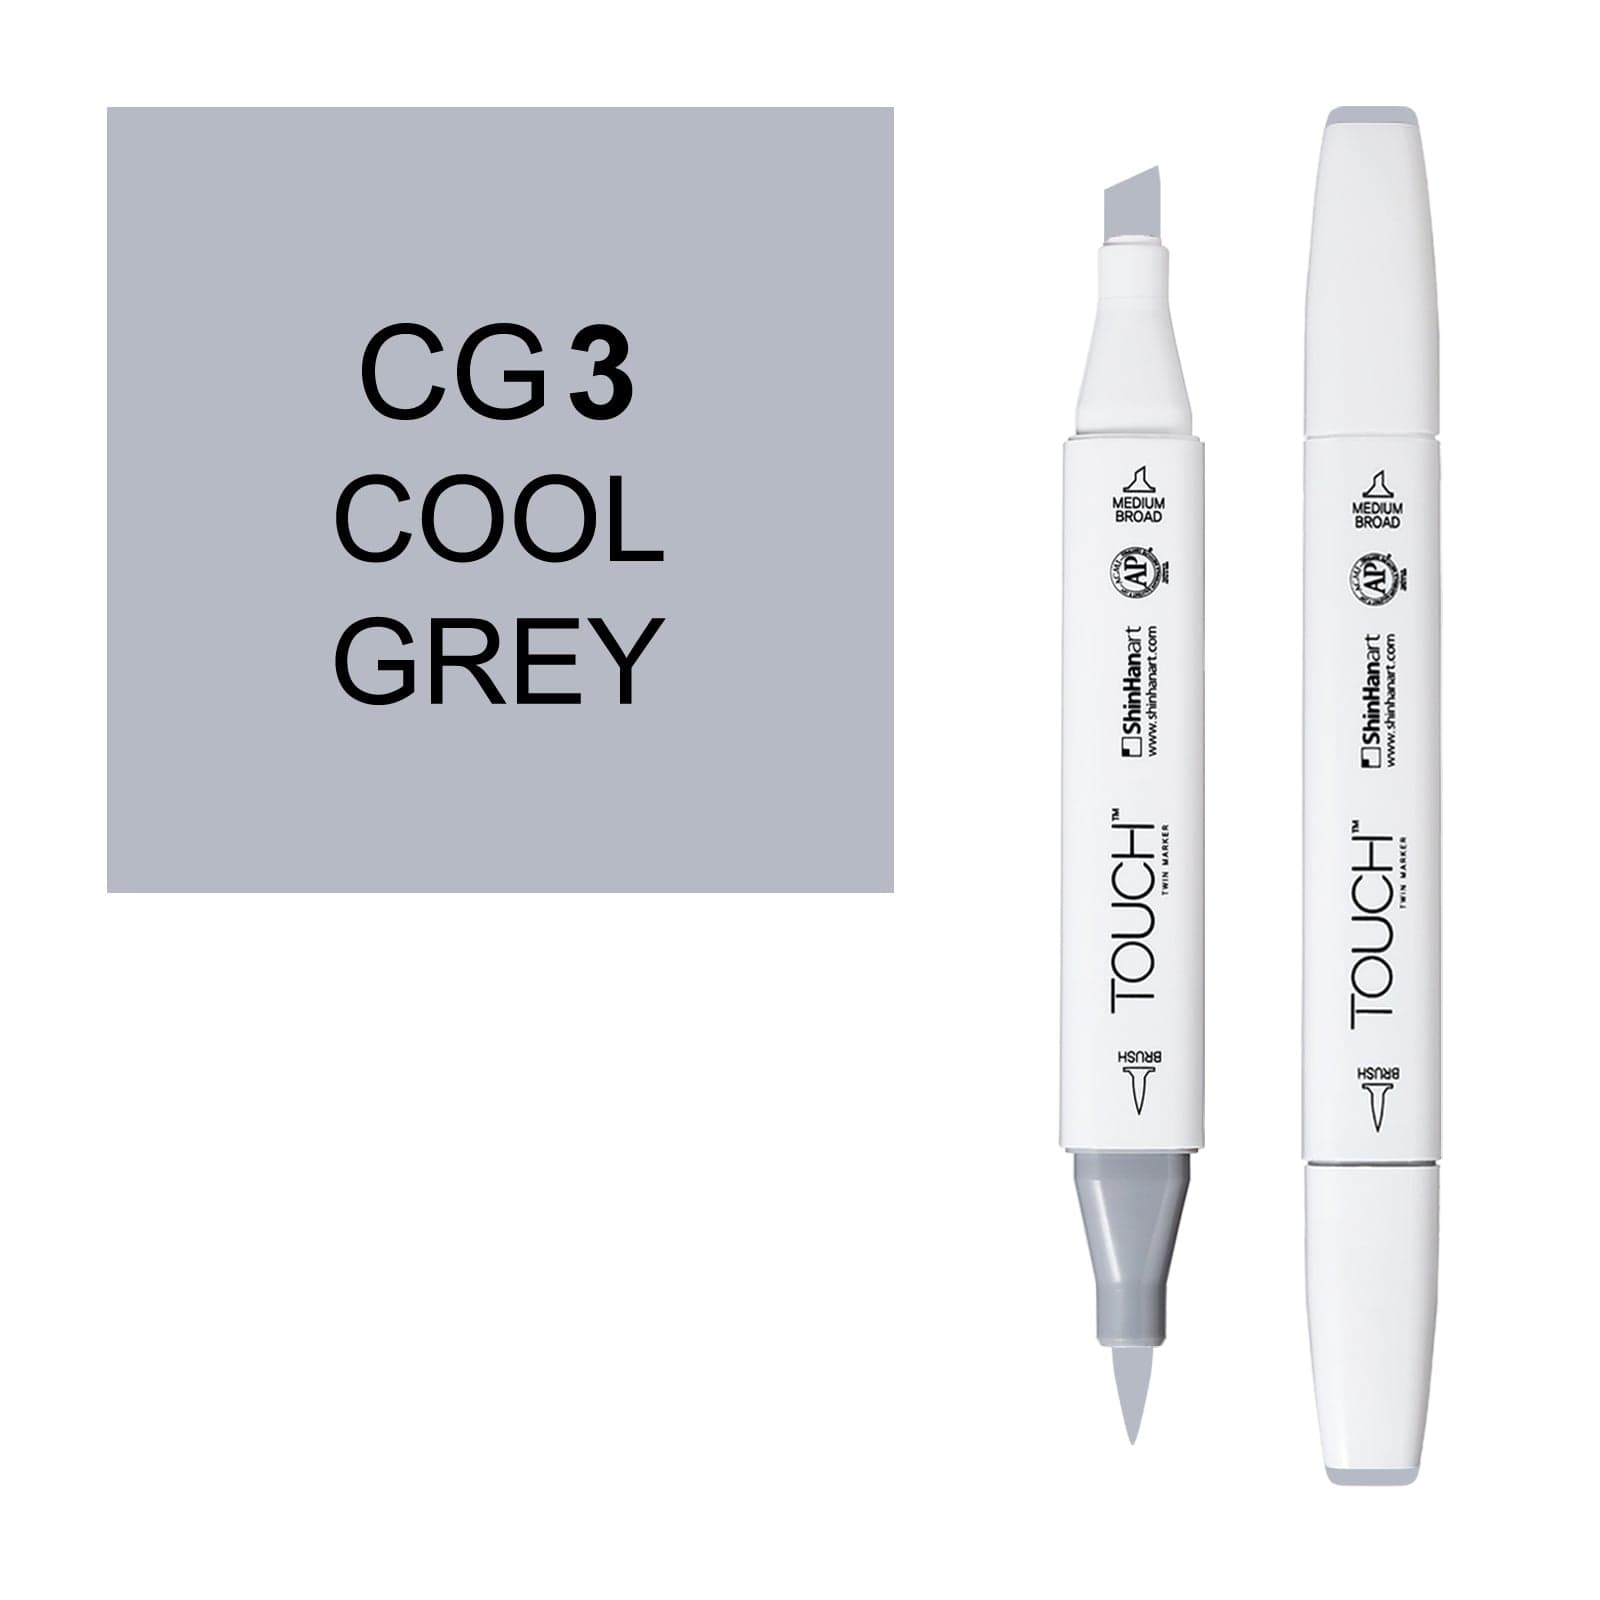 ShinHanart Touch Twin Brush Markers 3 Cool grey